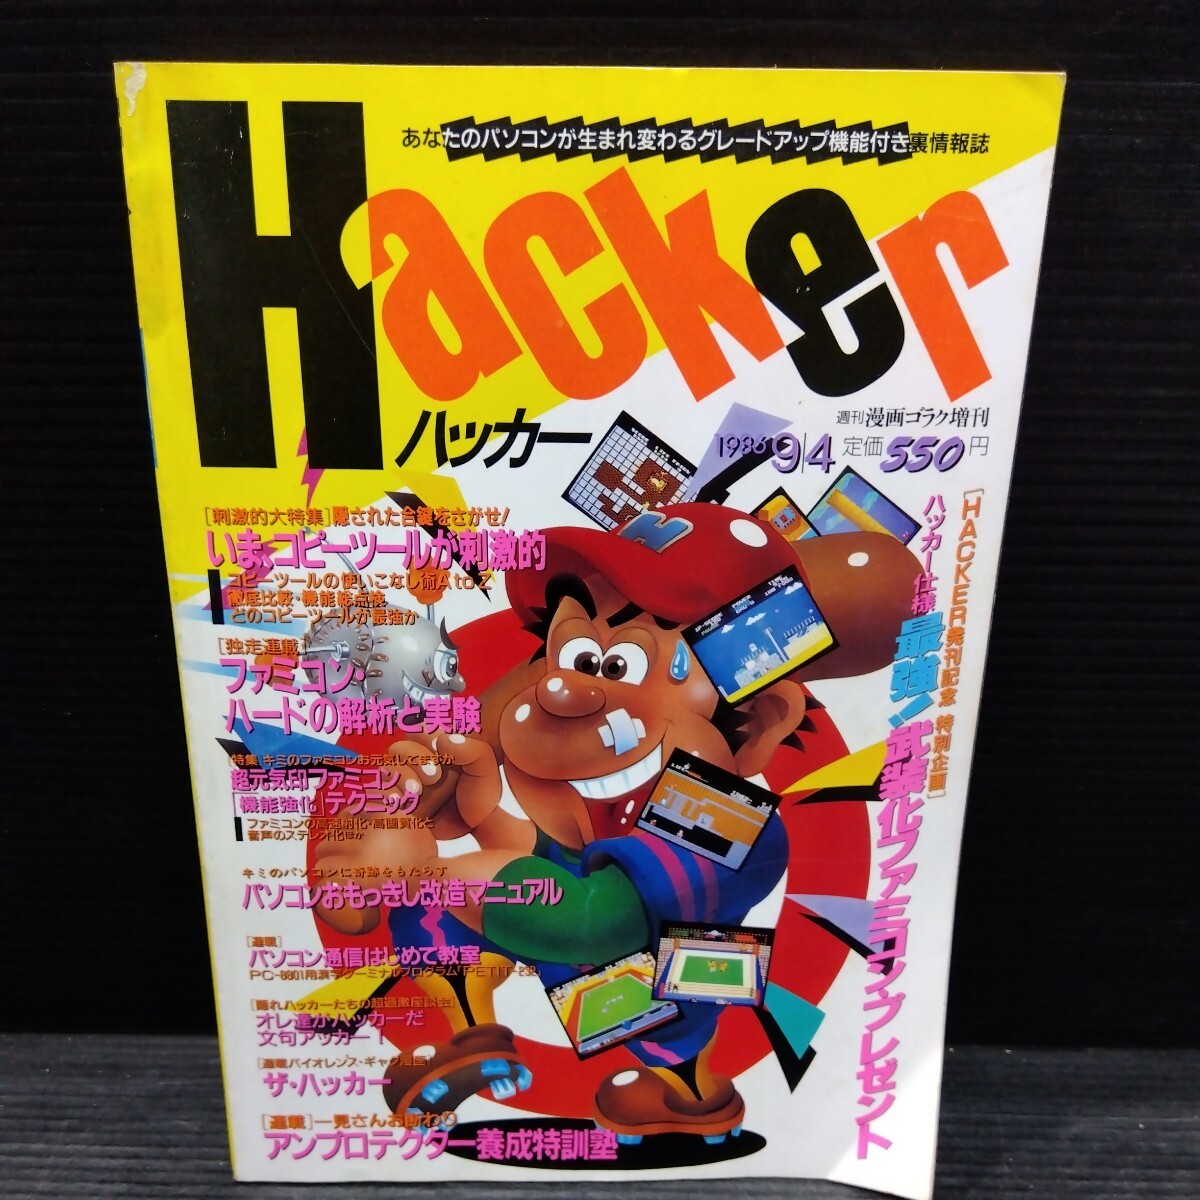 Hacker ハッカー 1986年9月4日号 雑誌 解析 裏情報誌 パソコン PC ファミコン ハード 改造マニュアル コピーツール 機能強化テクニック_画像1